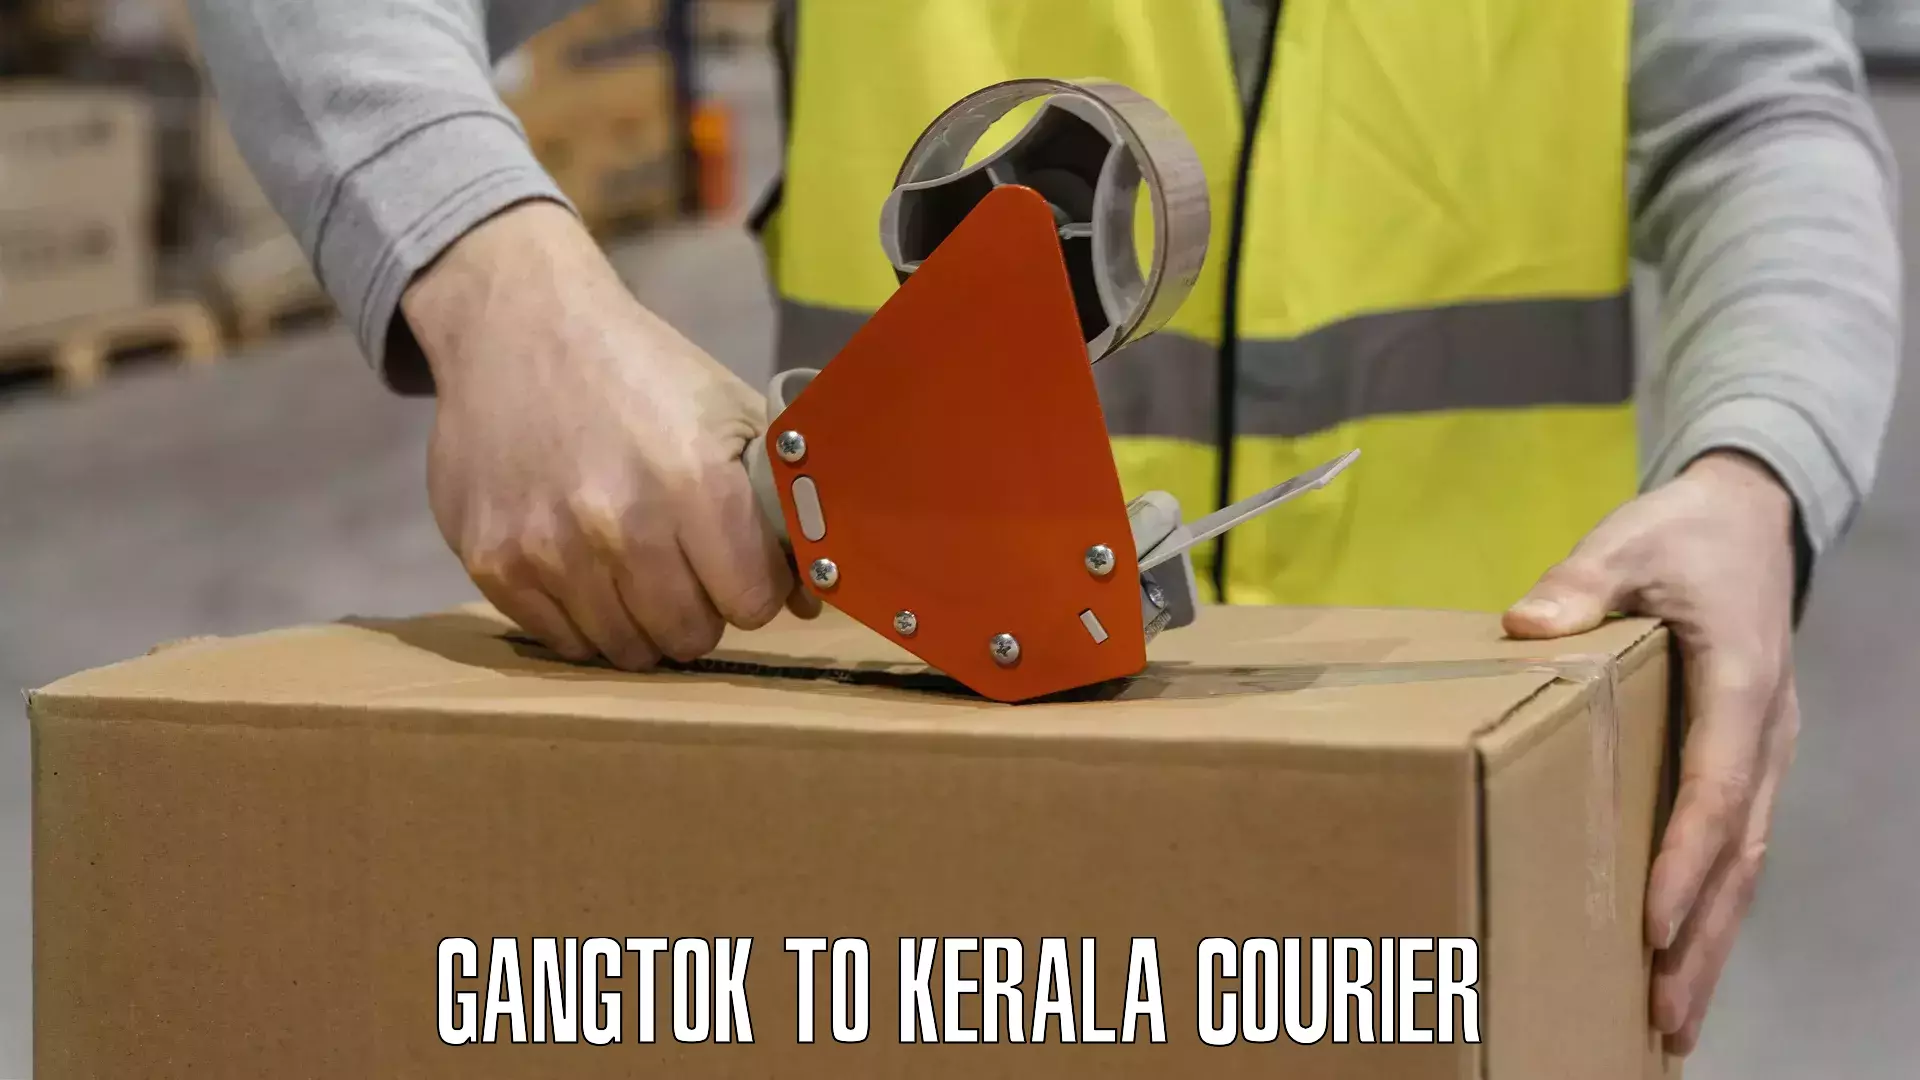 Bulk courier orders in Gangtok to Kerala